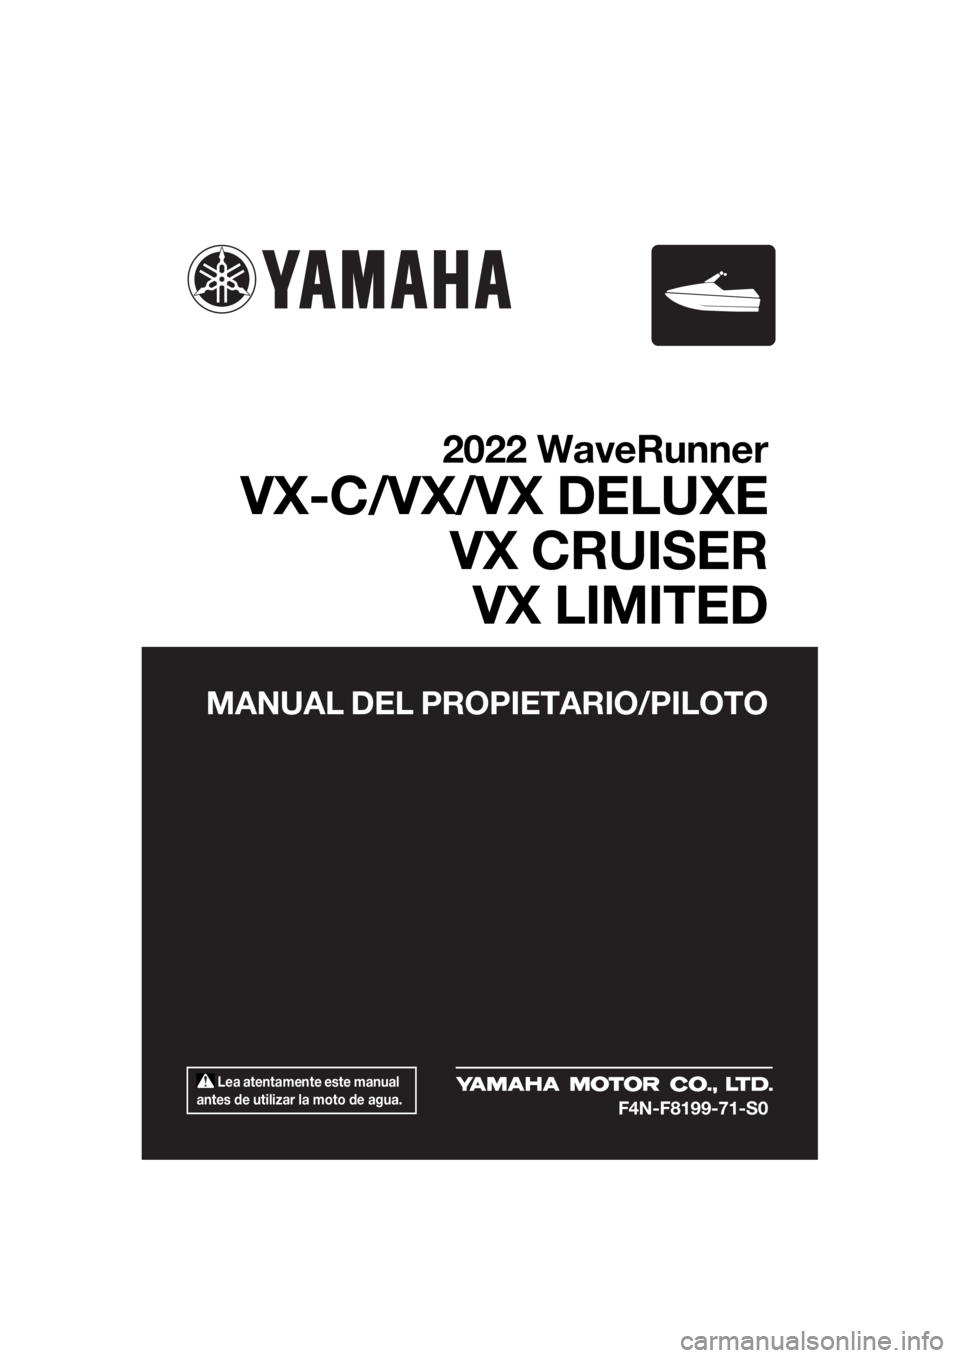 YAMAHA VX CRUISER 2022  Manuale de Empleo (in Spanish) 